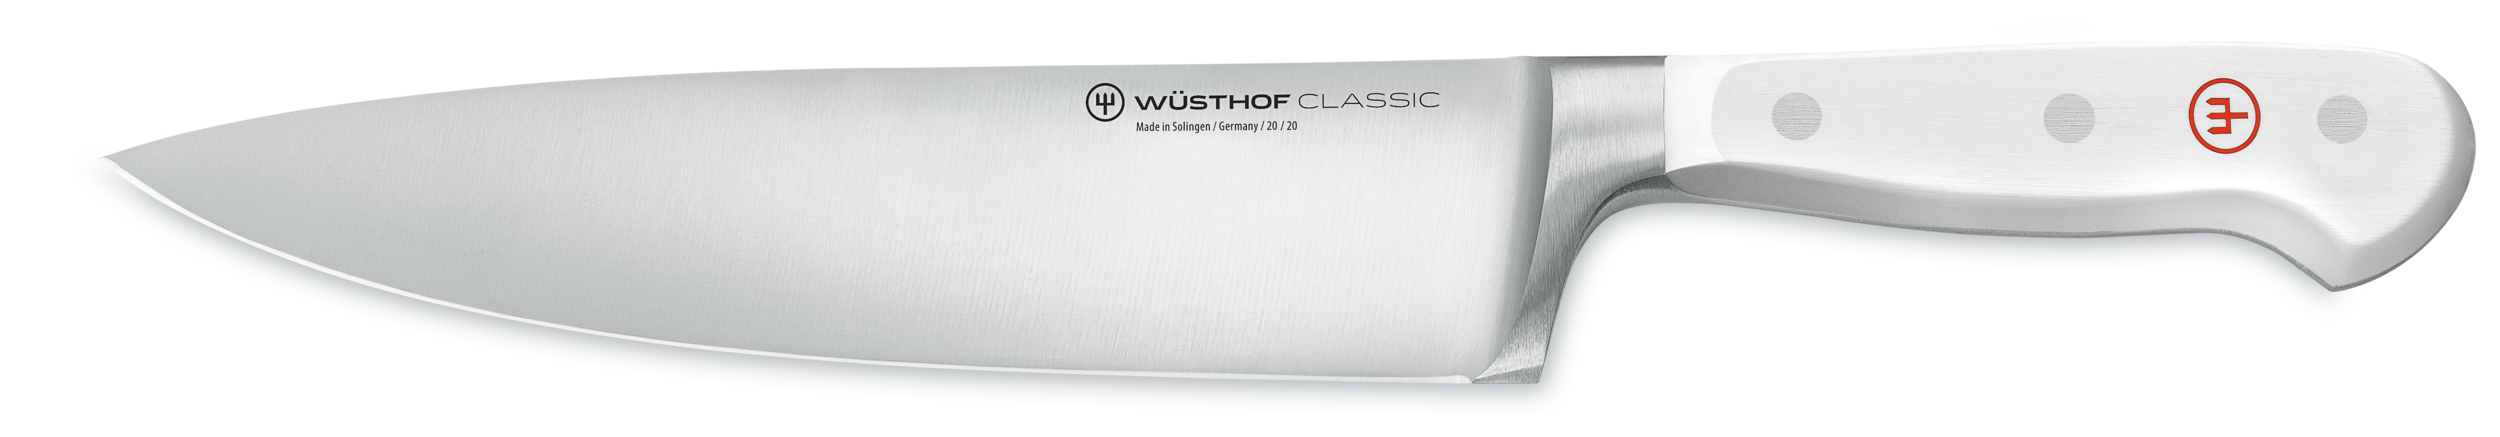 Wusthof Classic White Chef's Knife 20cm 1040200120